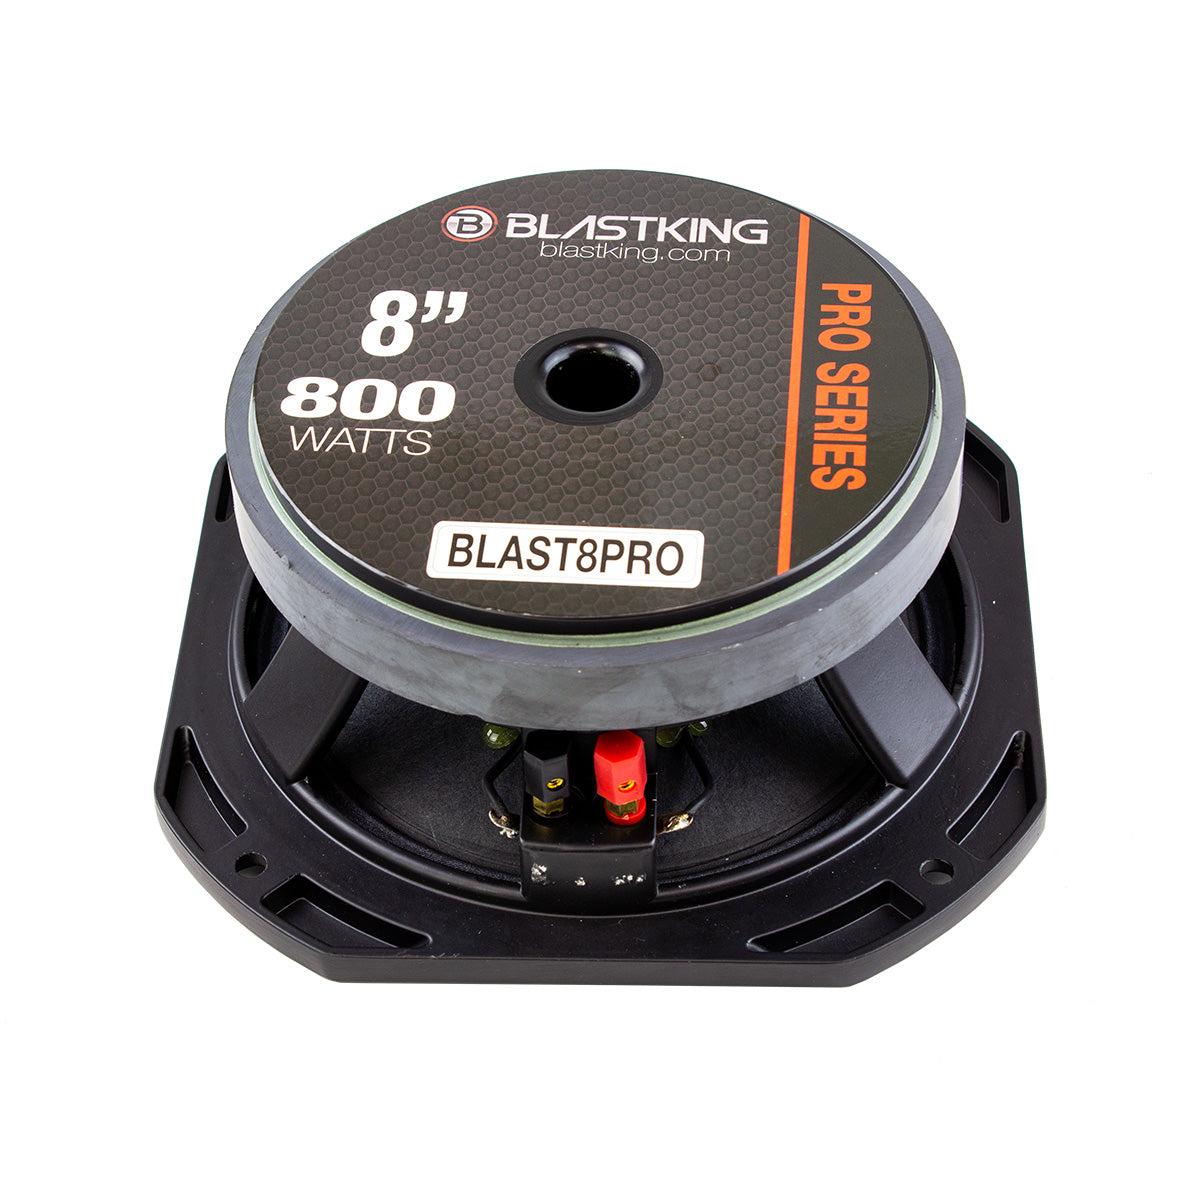 Blastking BLAST8PRO 8" 800 Watts Professional Transducer